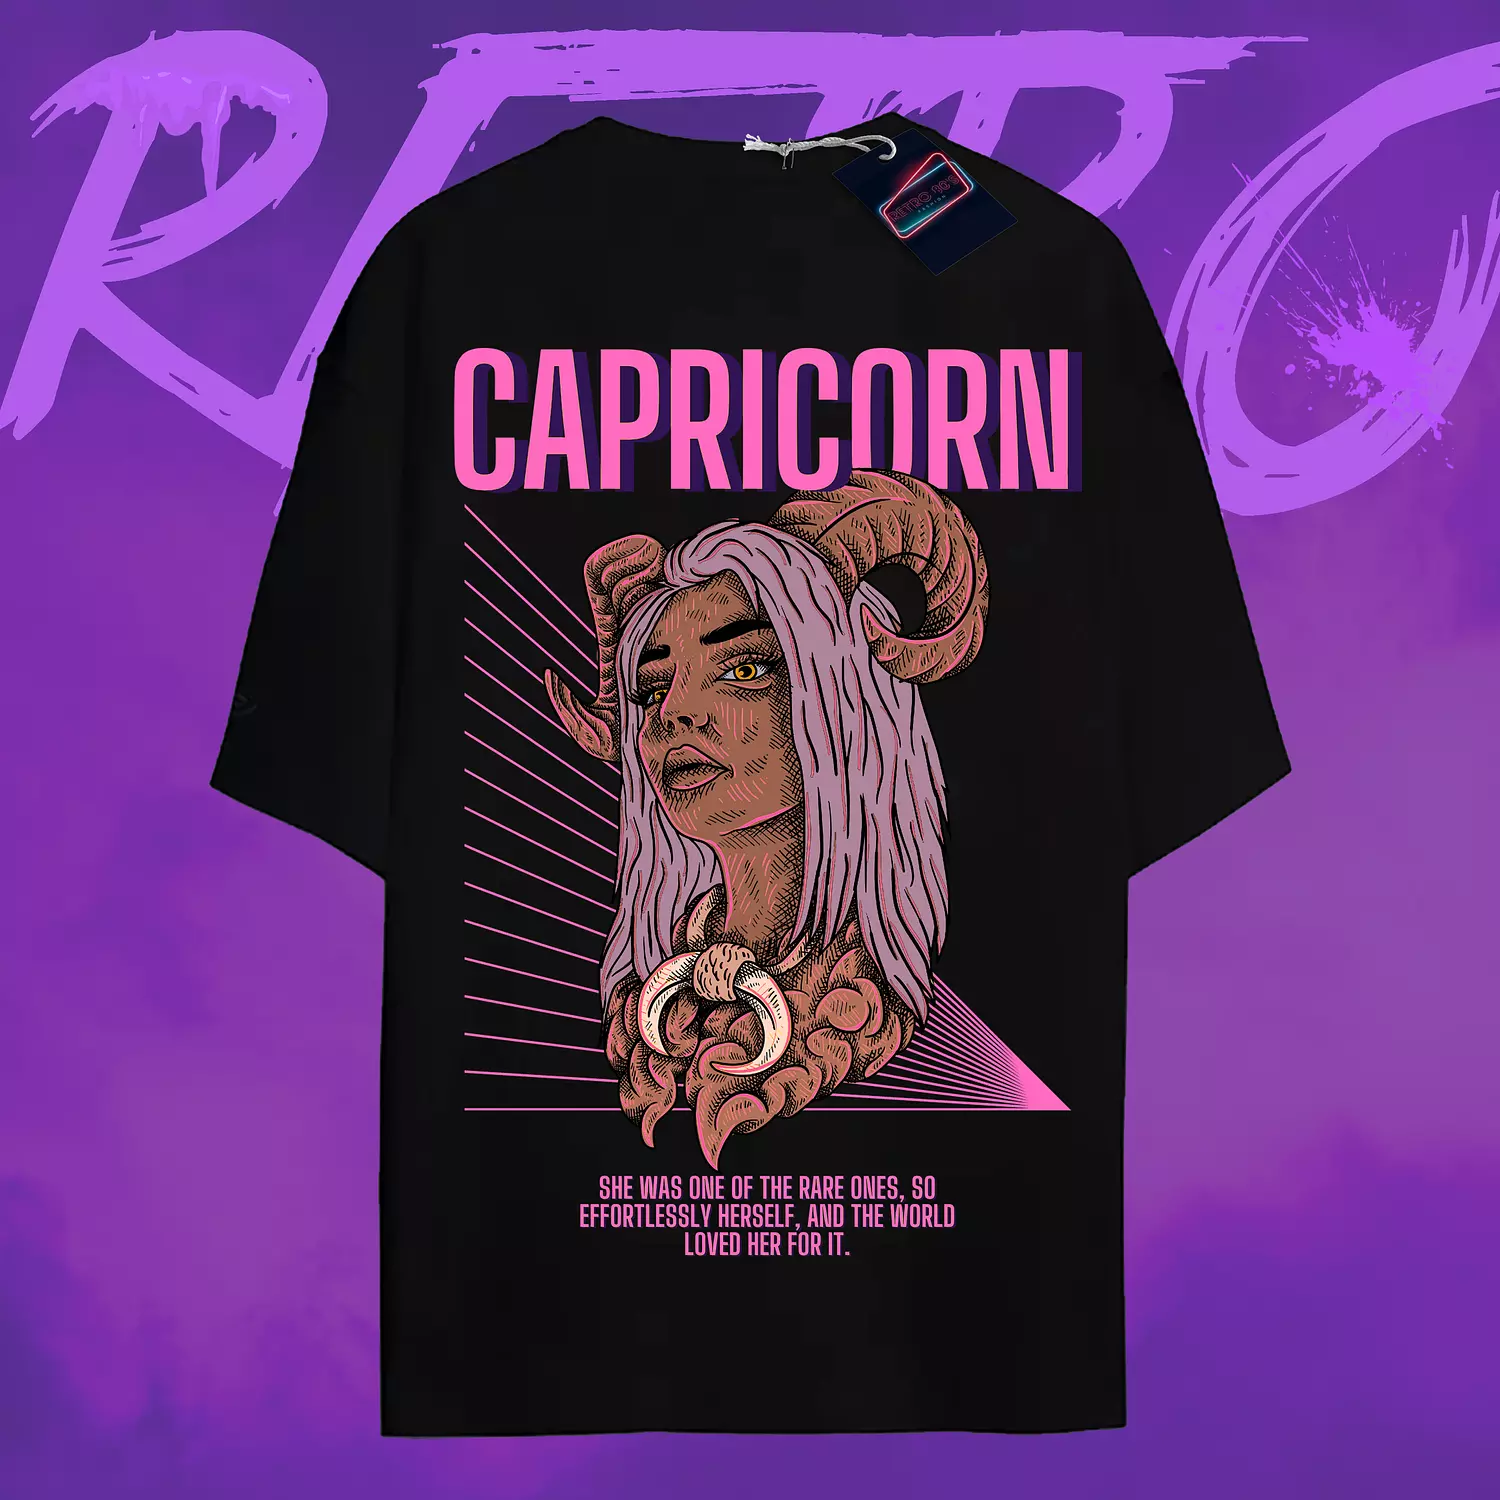 Capricorn T-shirt hover image